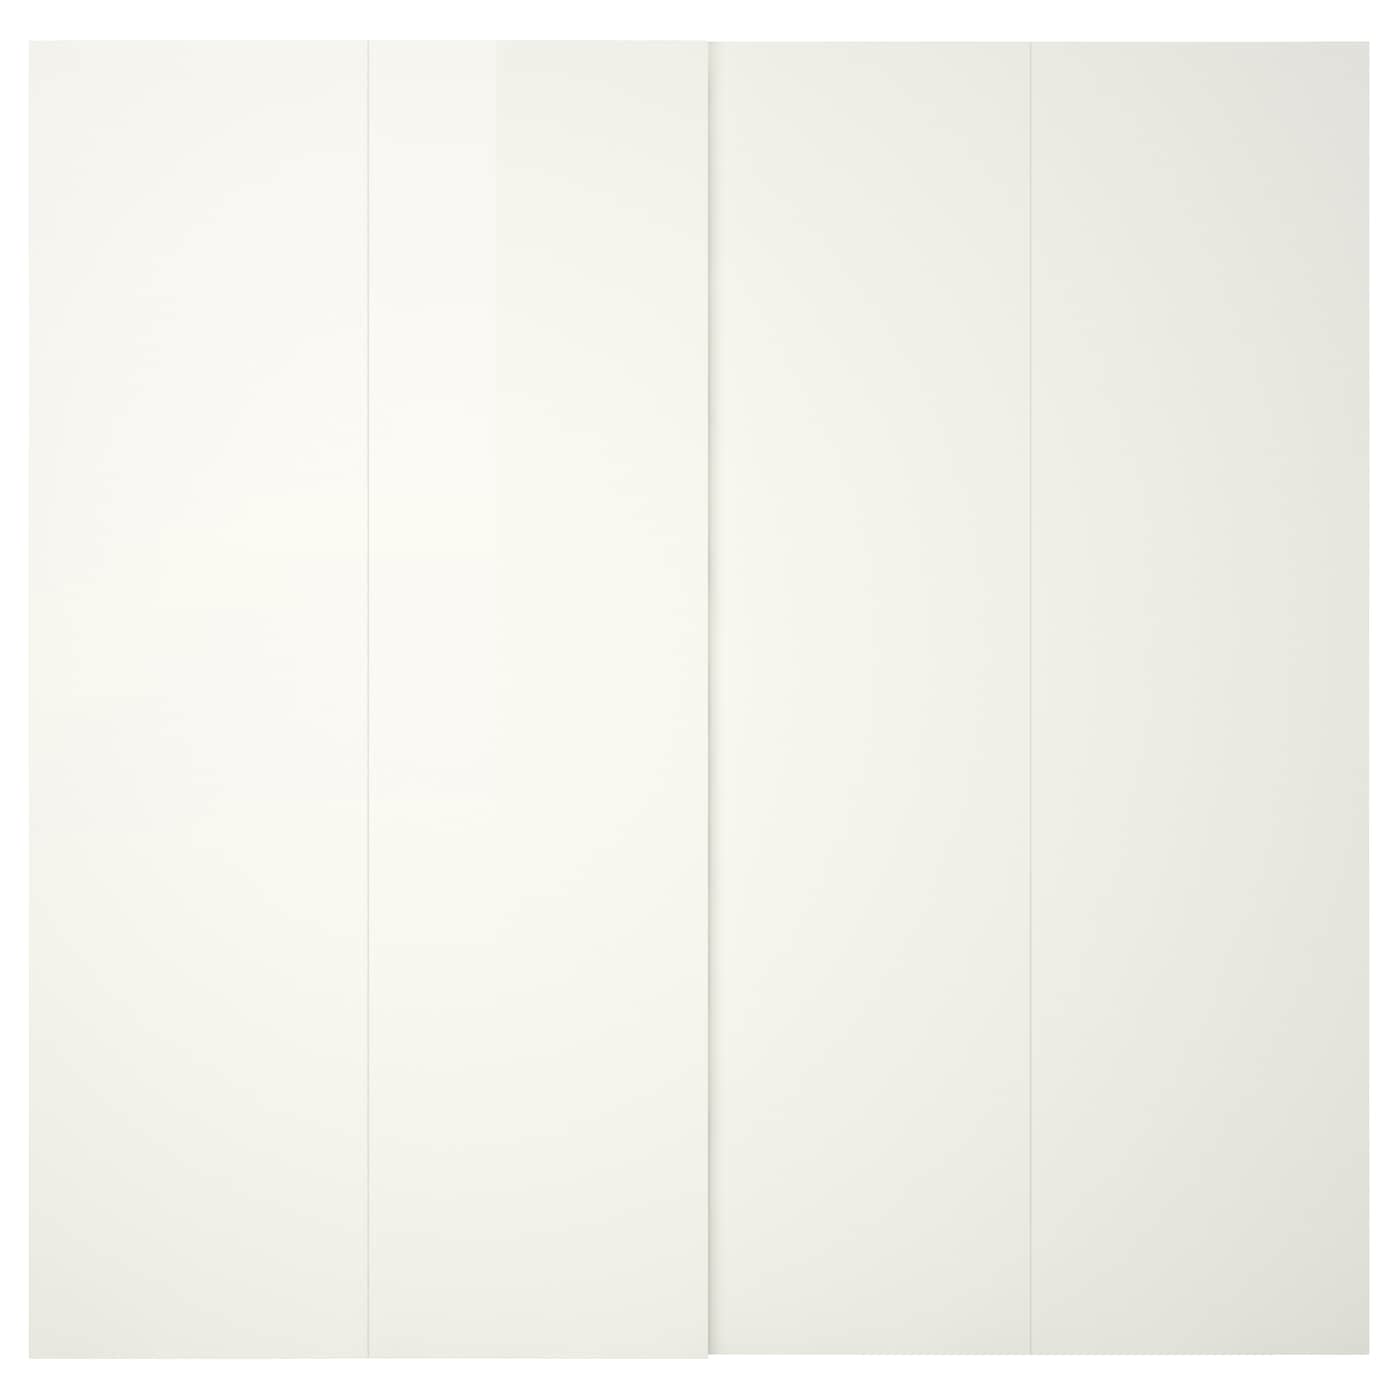 Пара раздвижных дверных рам - IKEA HASVIK /ХАСВИК ИКЕА, 200х236 см, белый